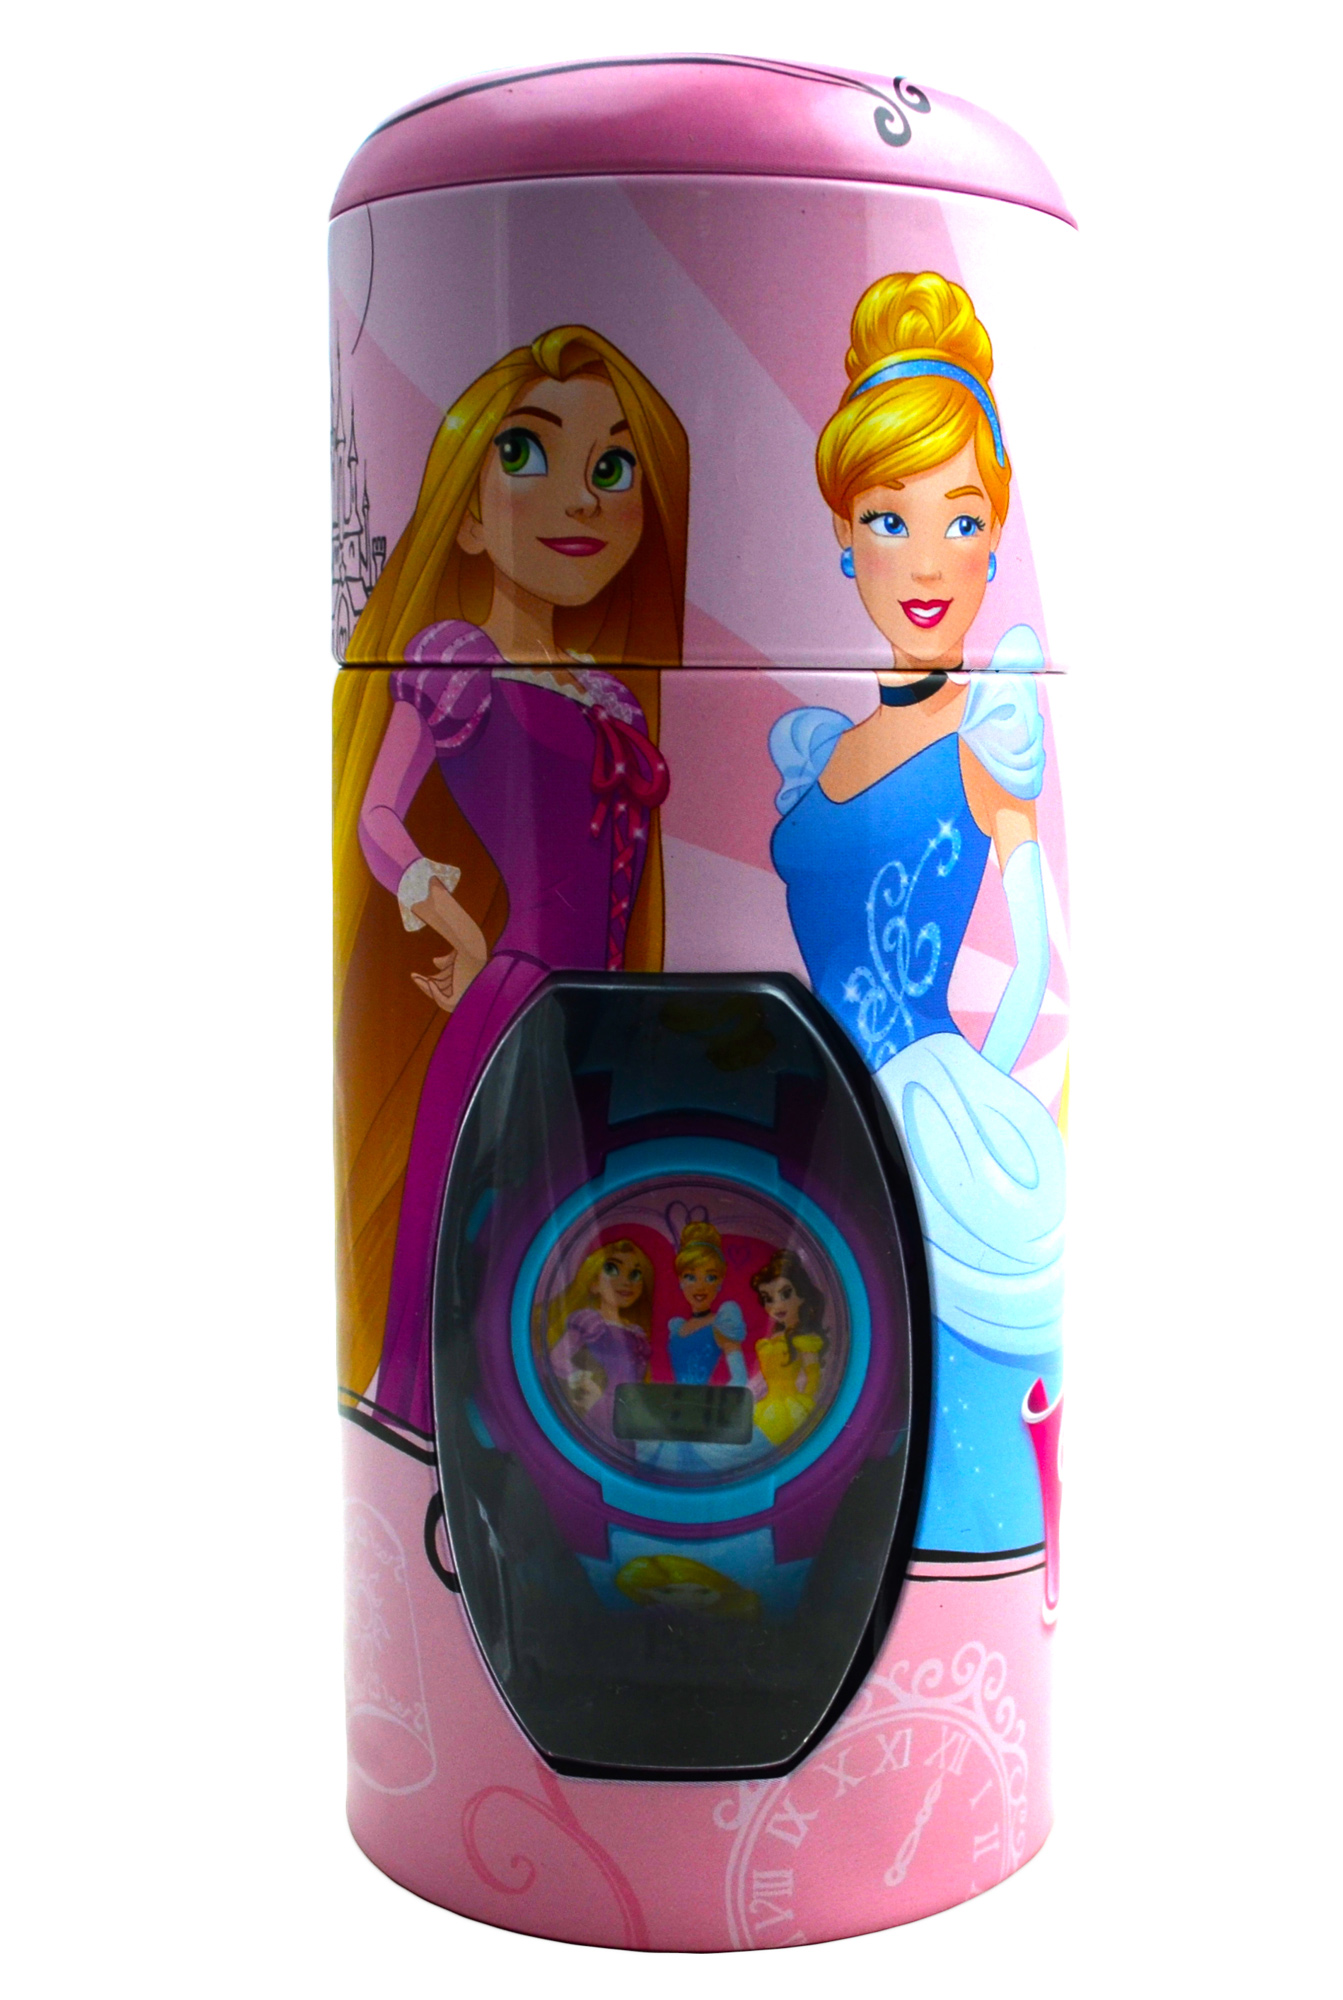 Disney Princess 'Cinderella & Friends' Girls Digital Metal Tin Gift Wrist Watch